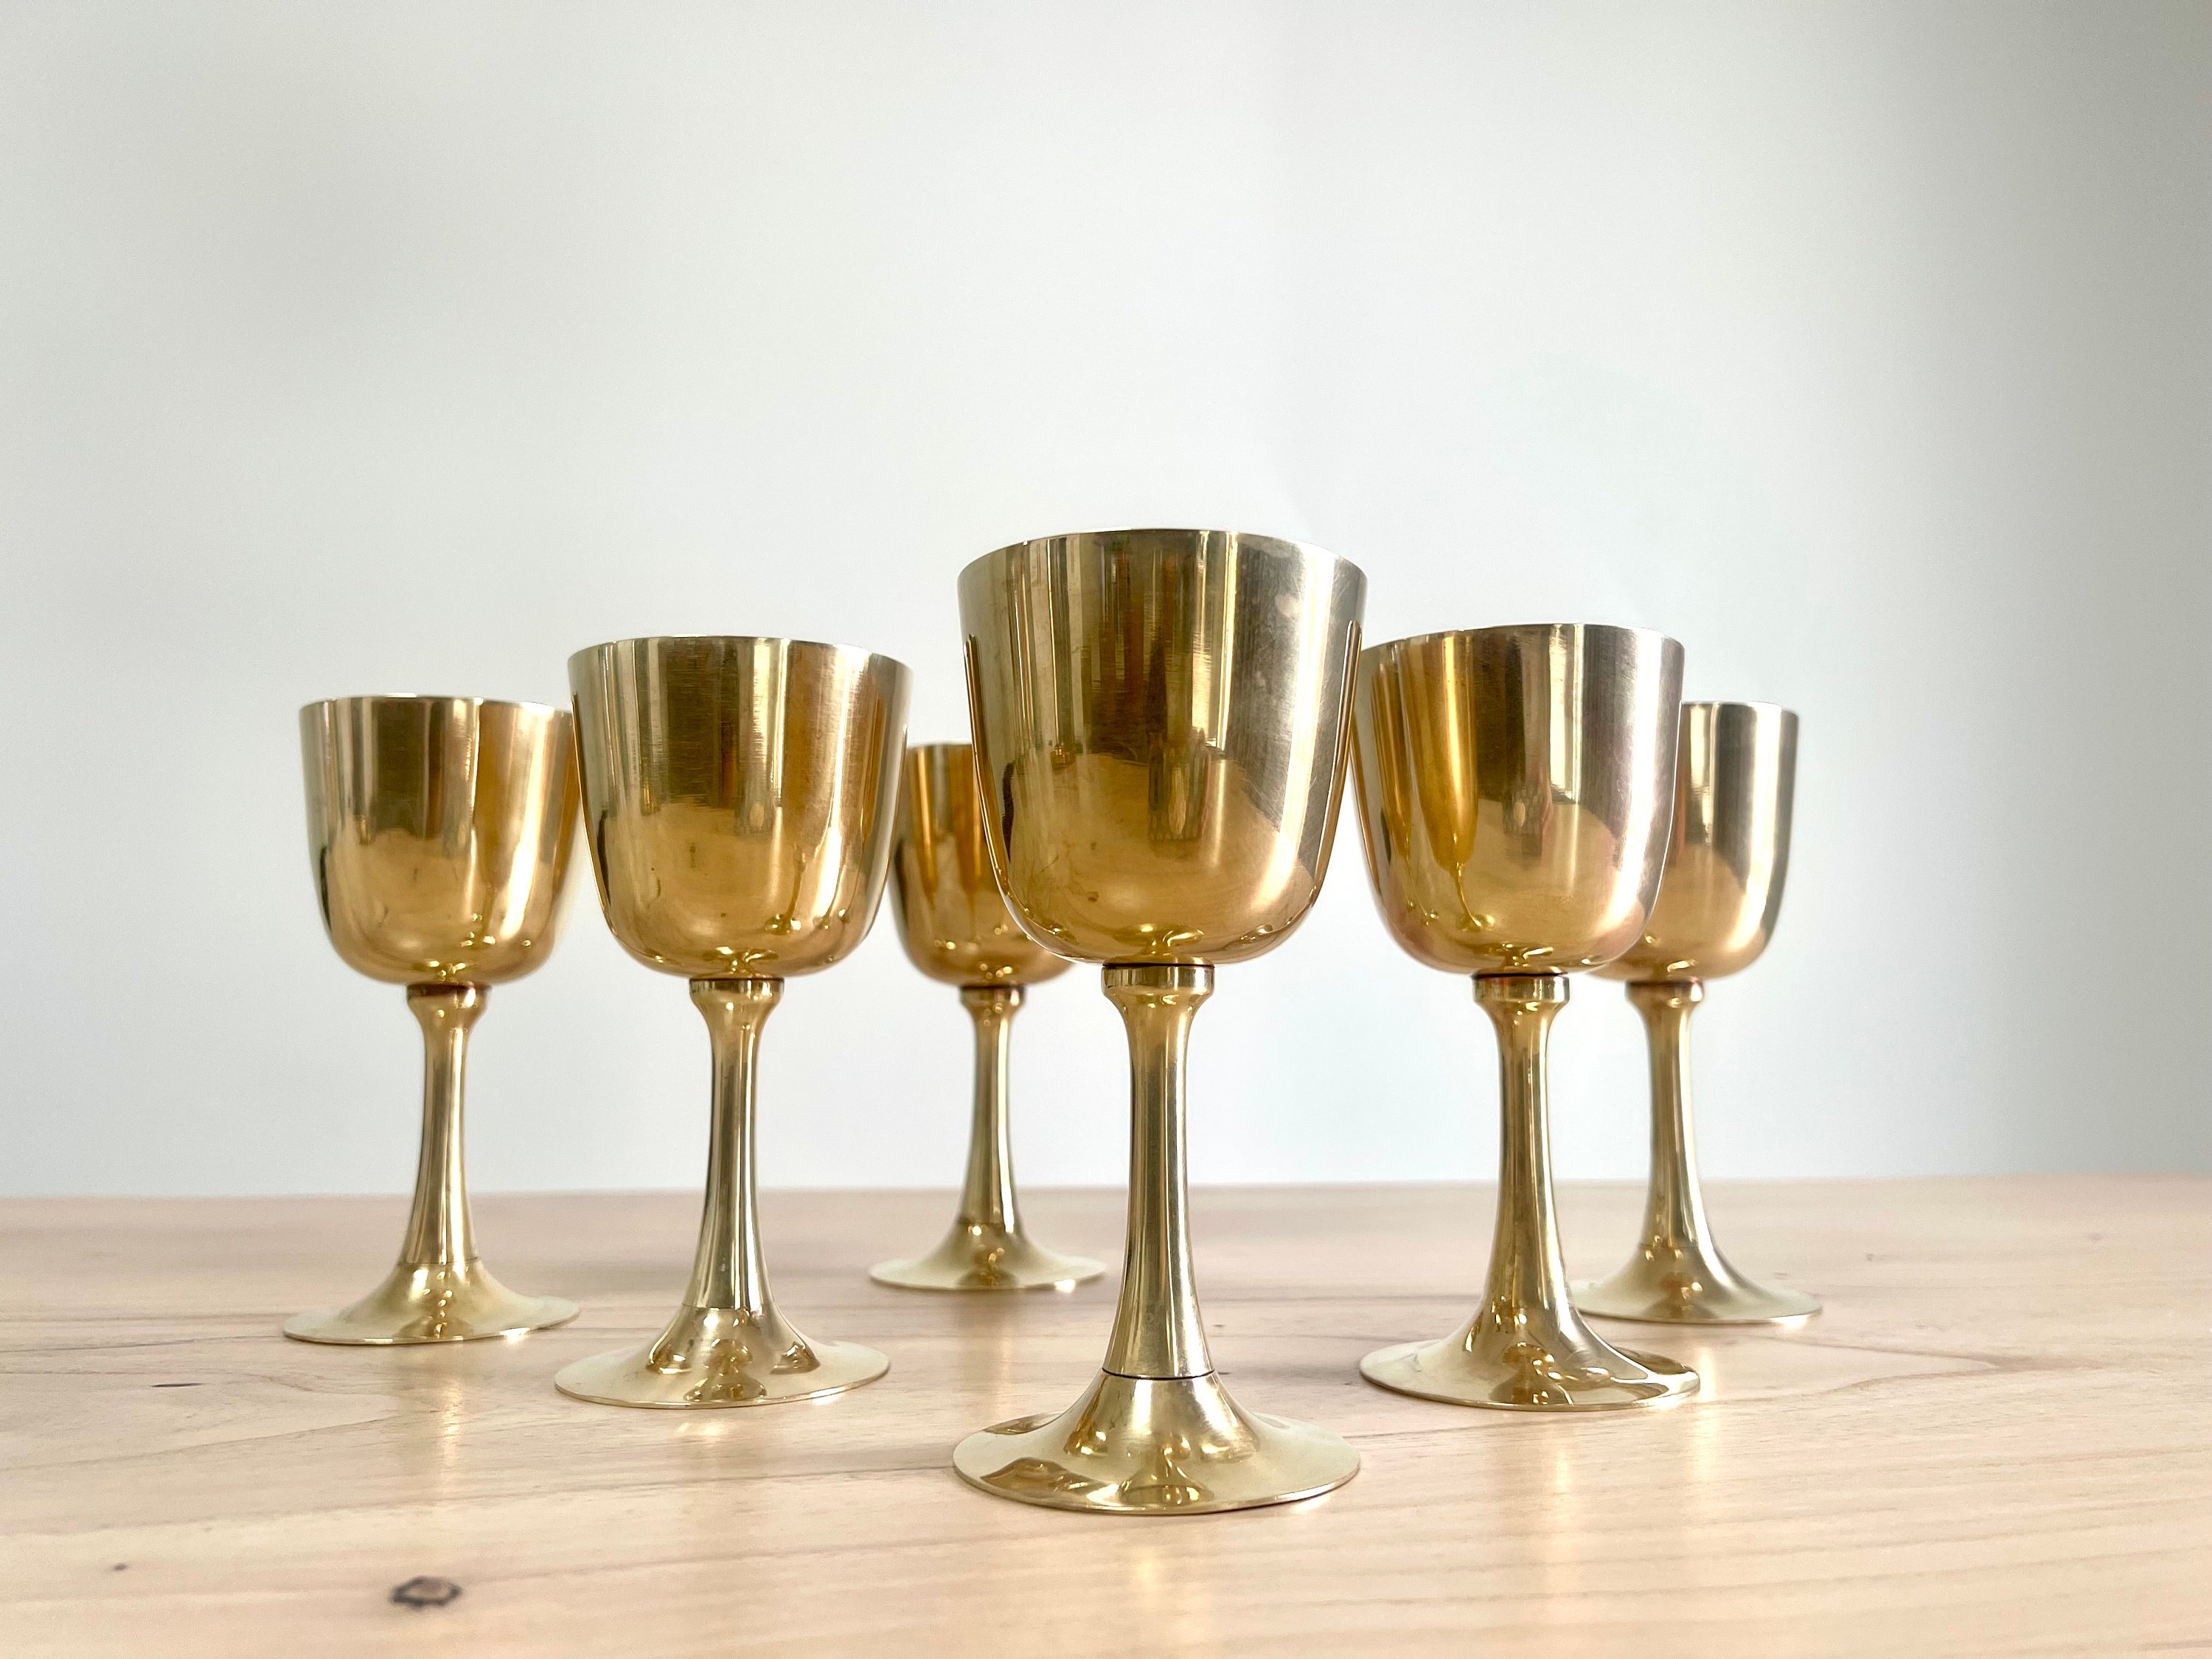 Vintage Brass Wine Goblets, Thailand Handmade Drinking Glasses